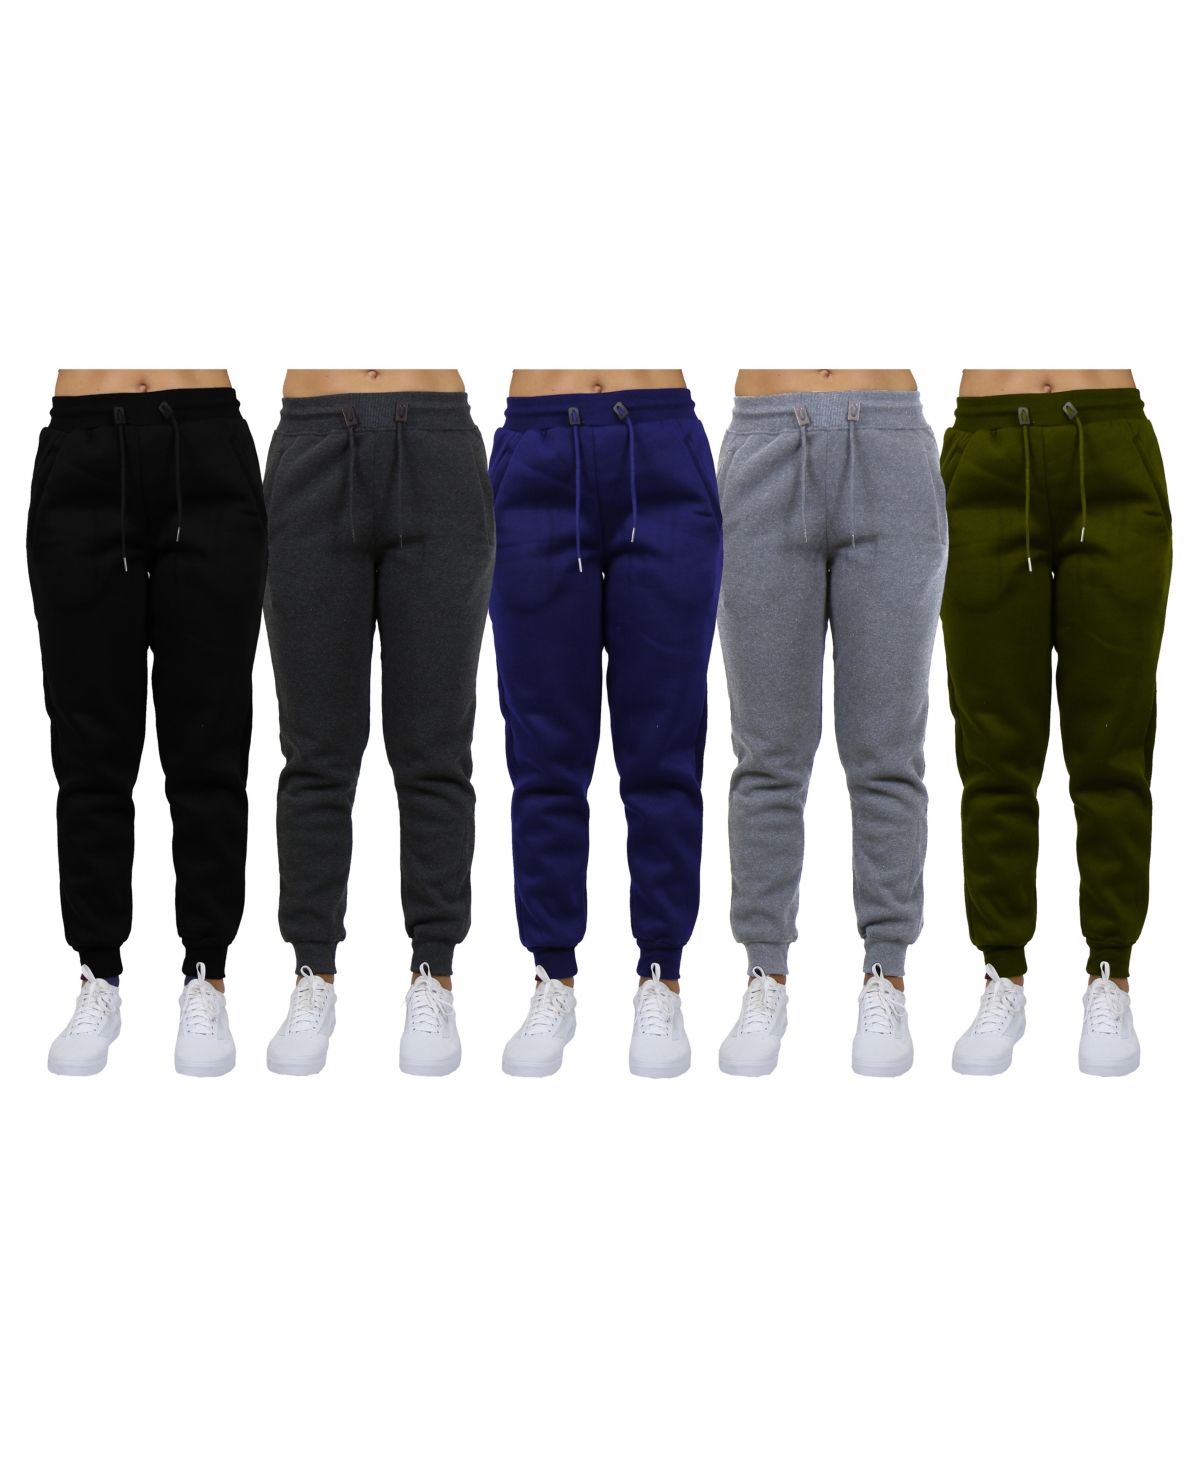 Women's Loose-Fit Fleece Jogger Sweatpants-5 Pack - Black-Charcoal-Navy-Heather Grey-Olive